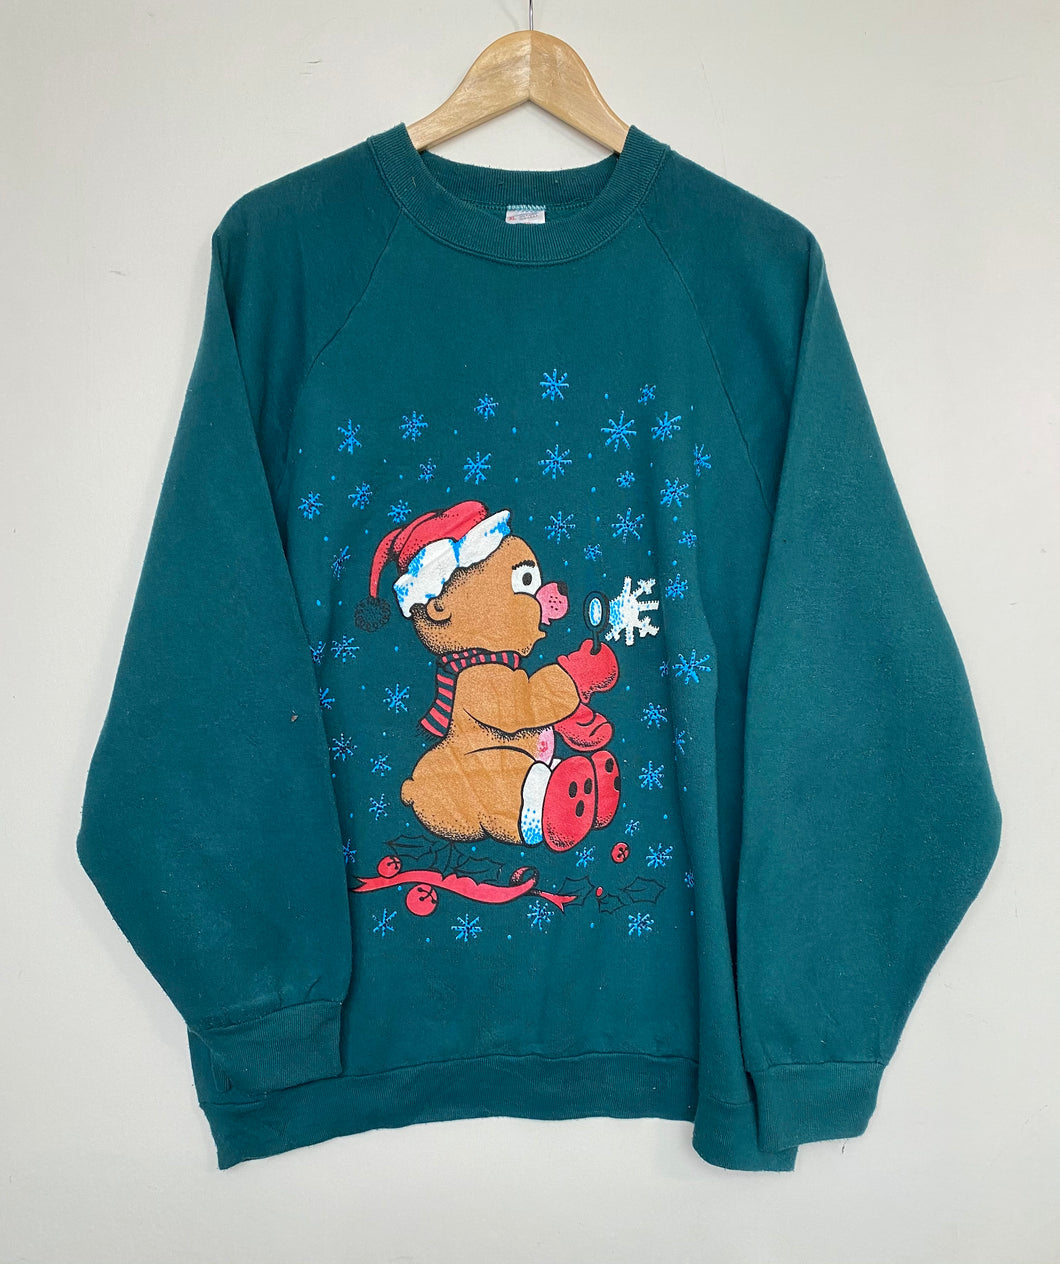 Printed ‘Bear’ sweatshirt (XL)